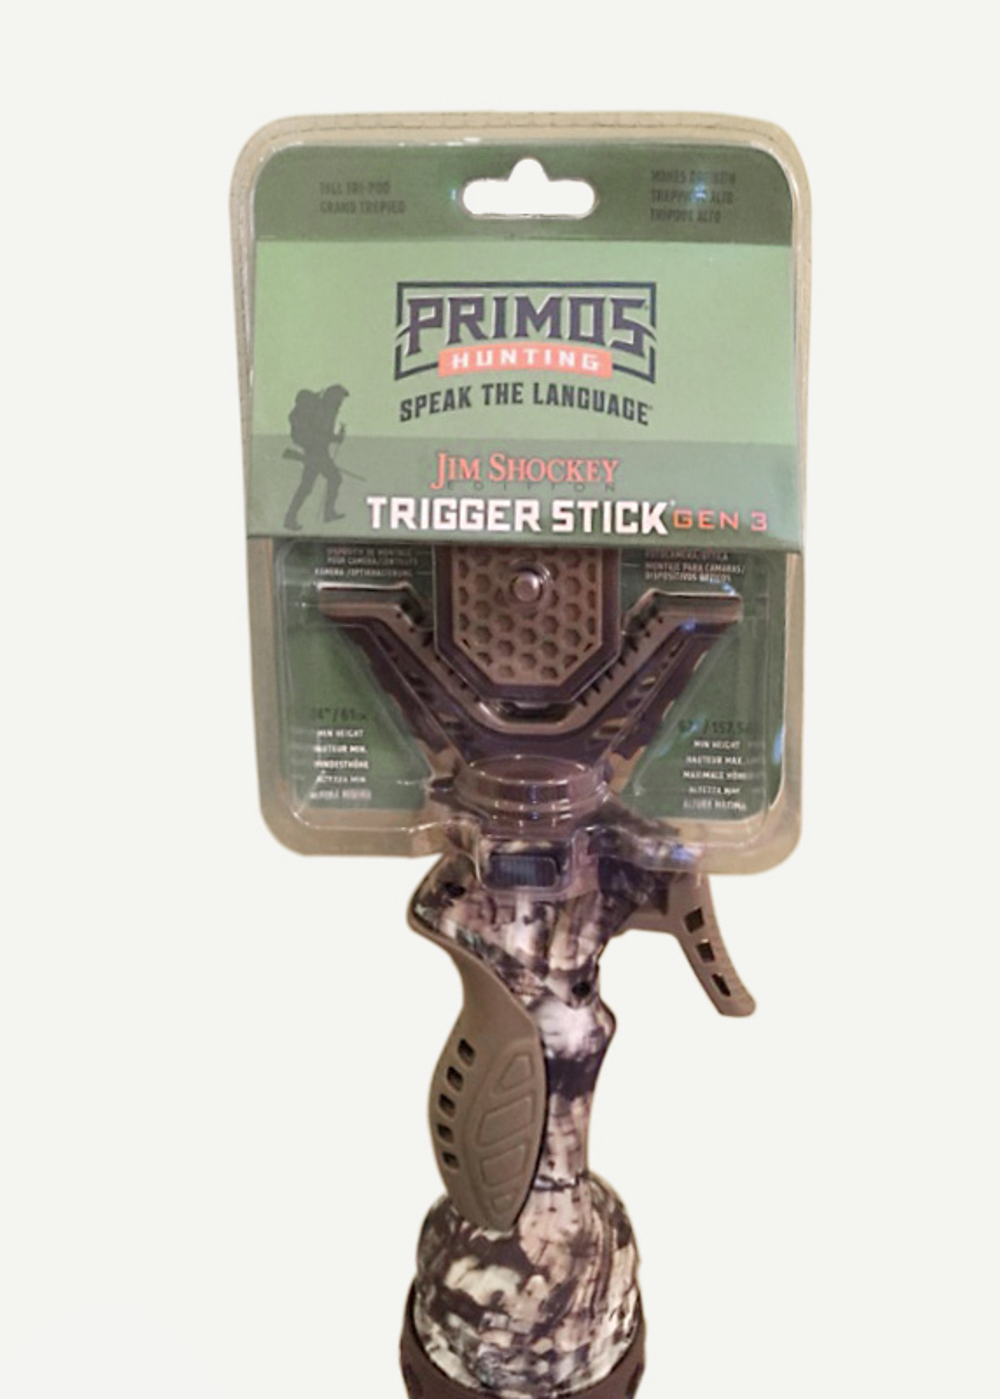 Trigger Stick